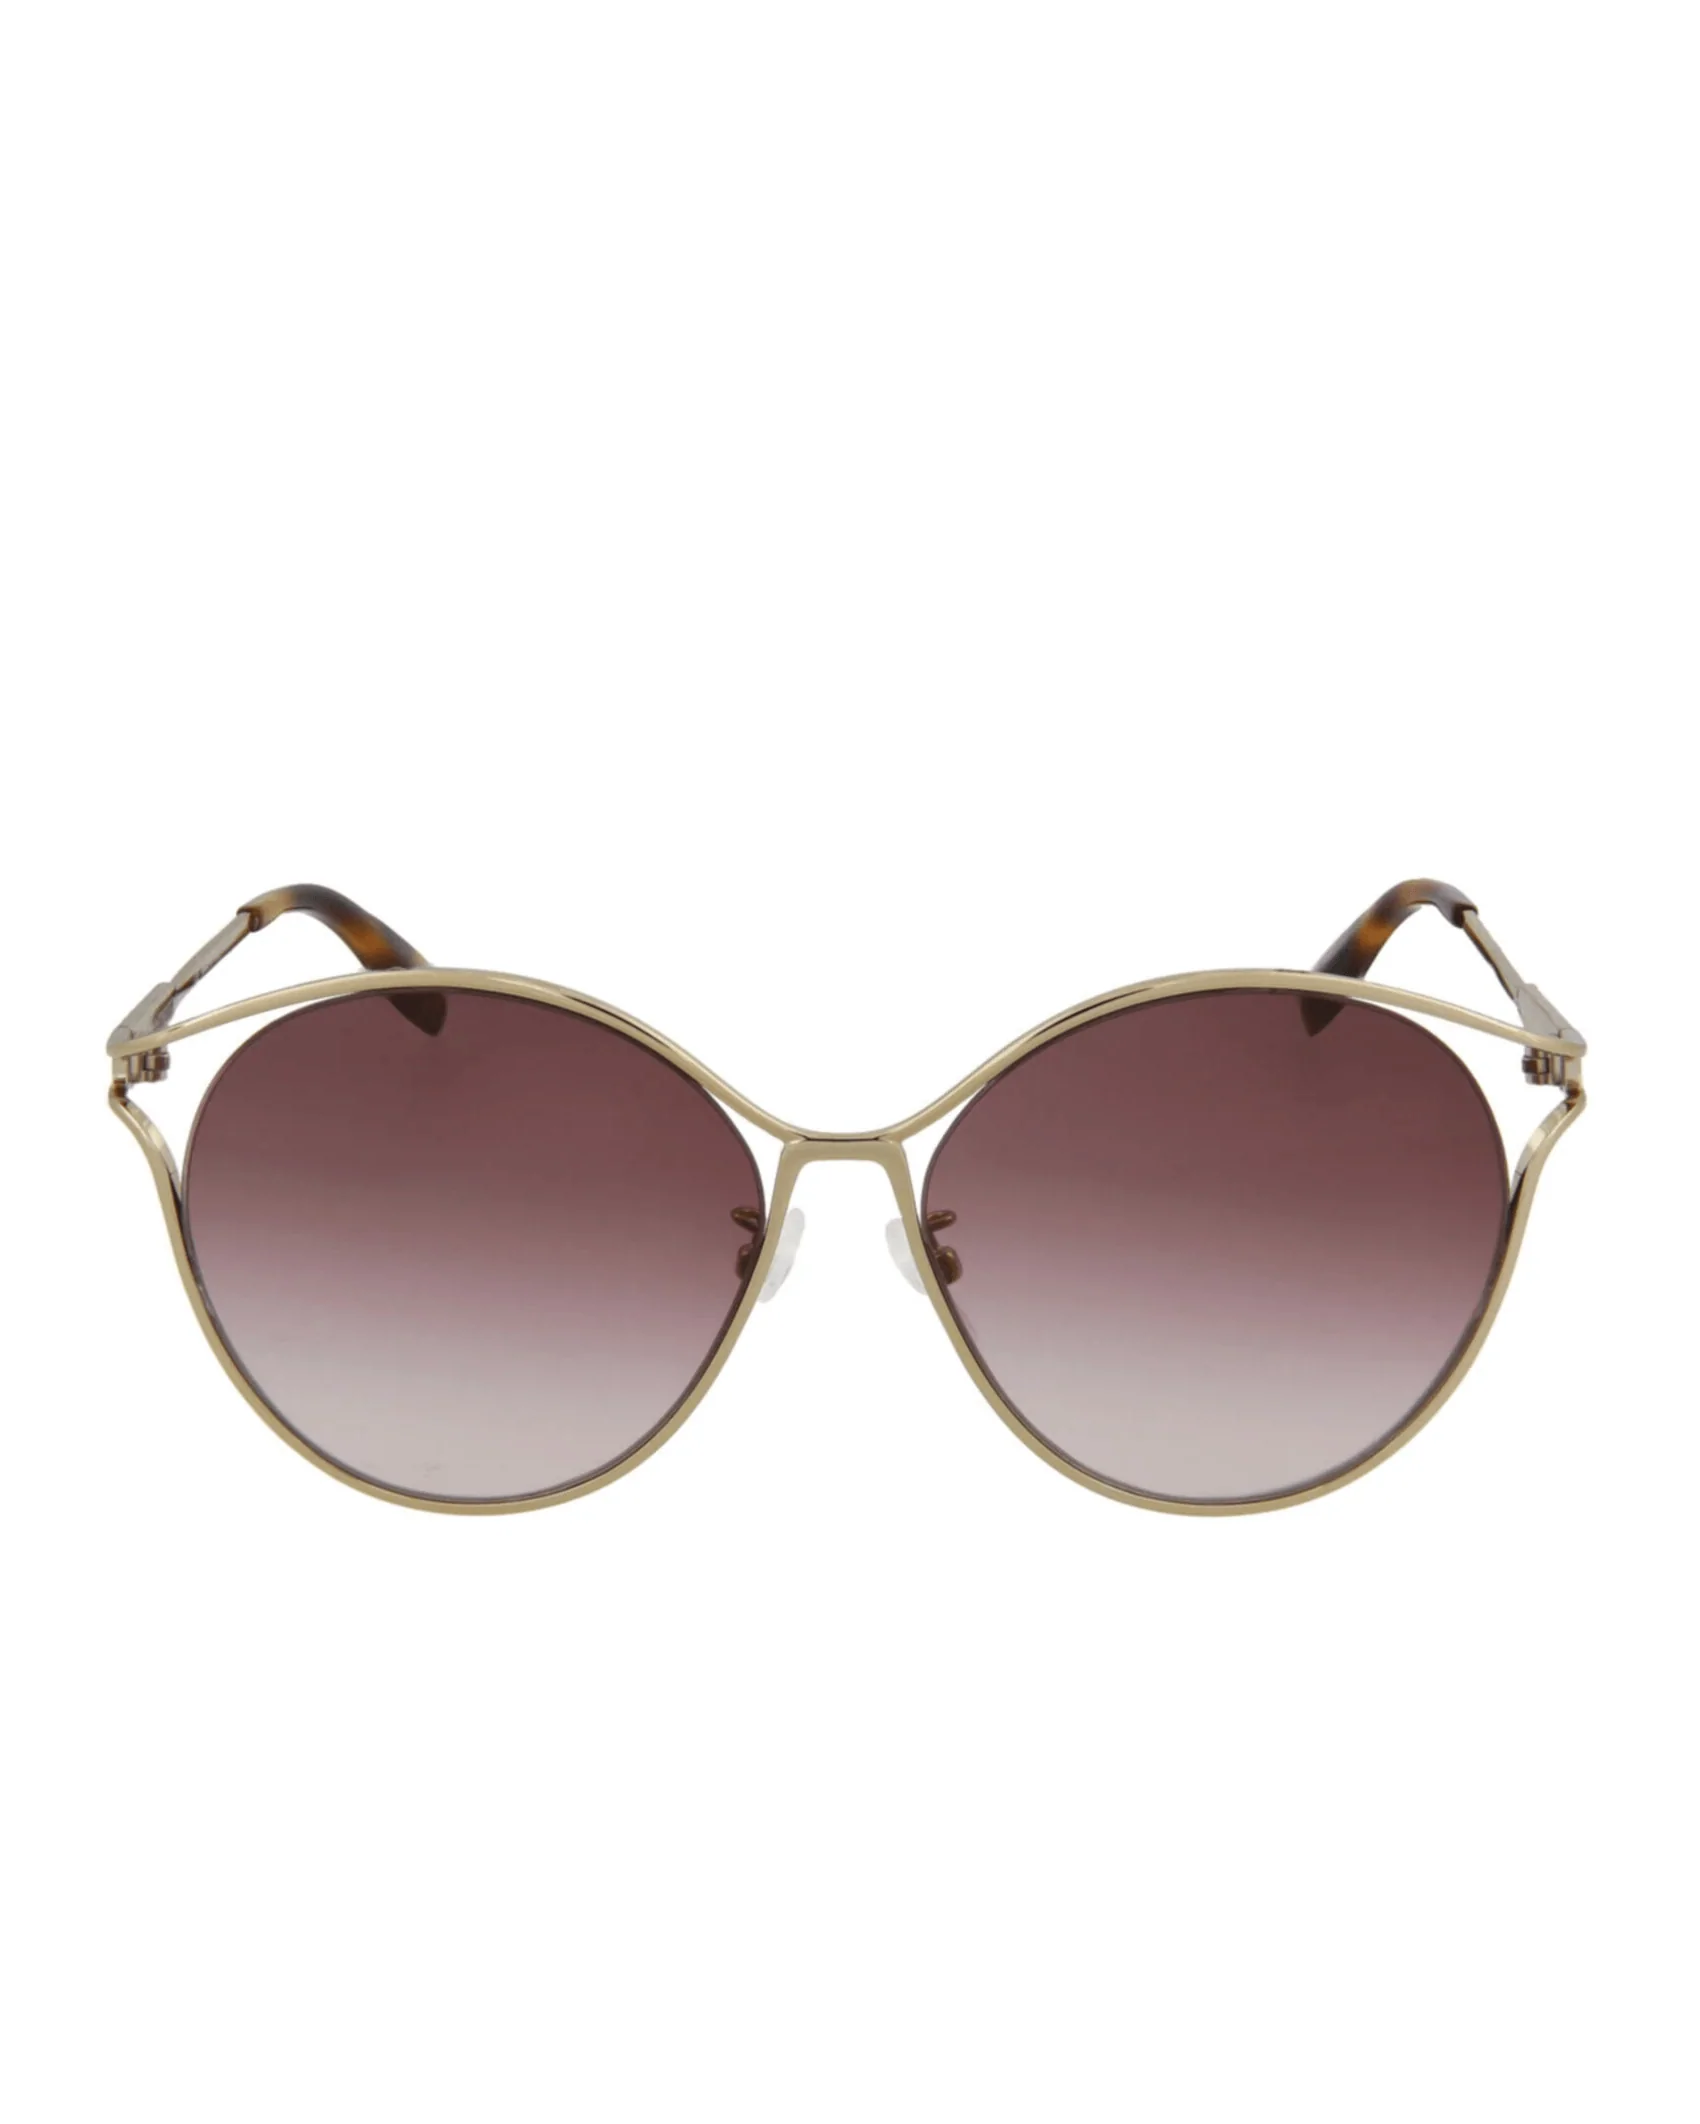 Alexander McQueen AM0210SA 004 Gold Violet Round Sunglasses